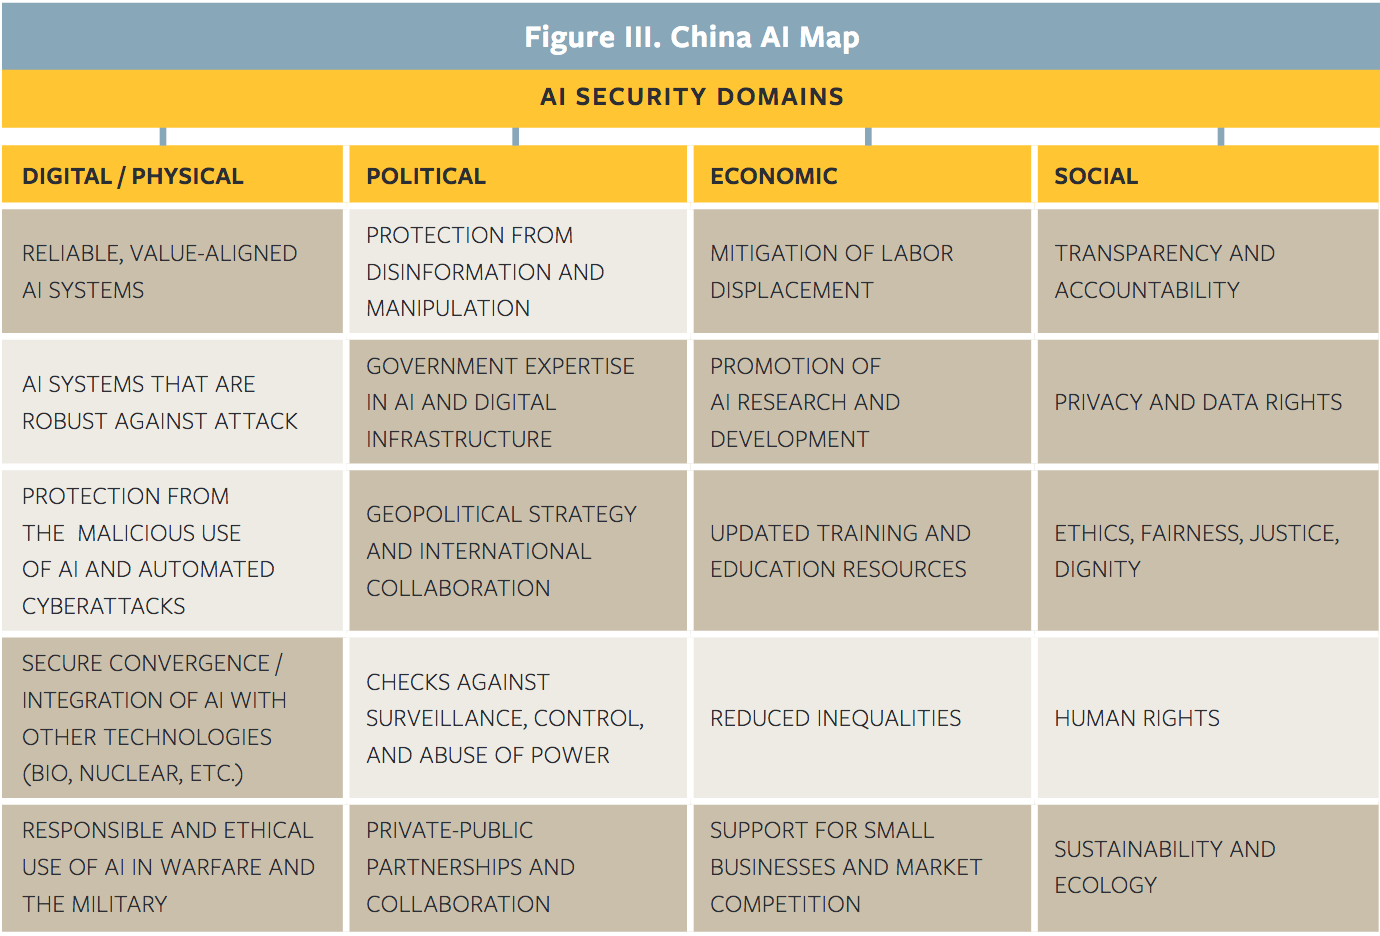 China AI Policy Map